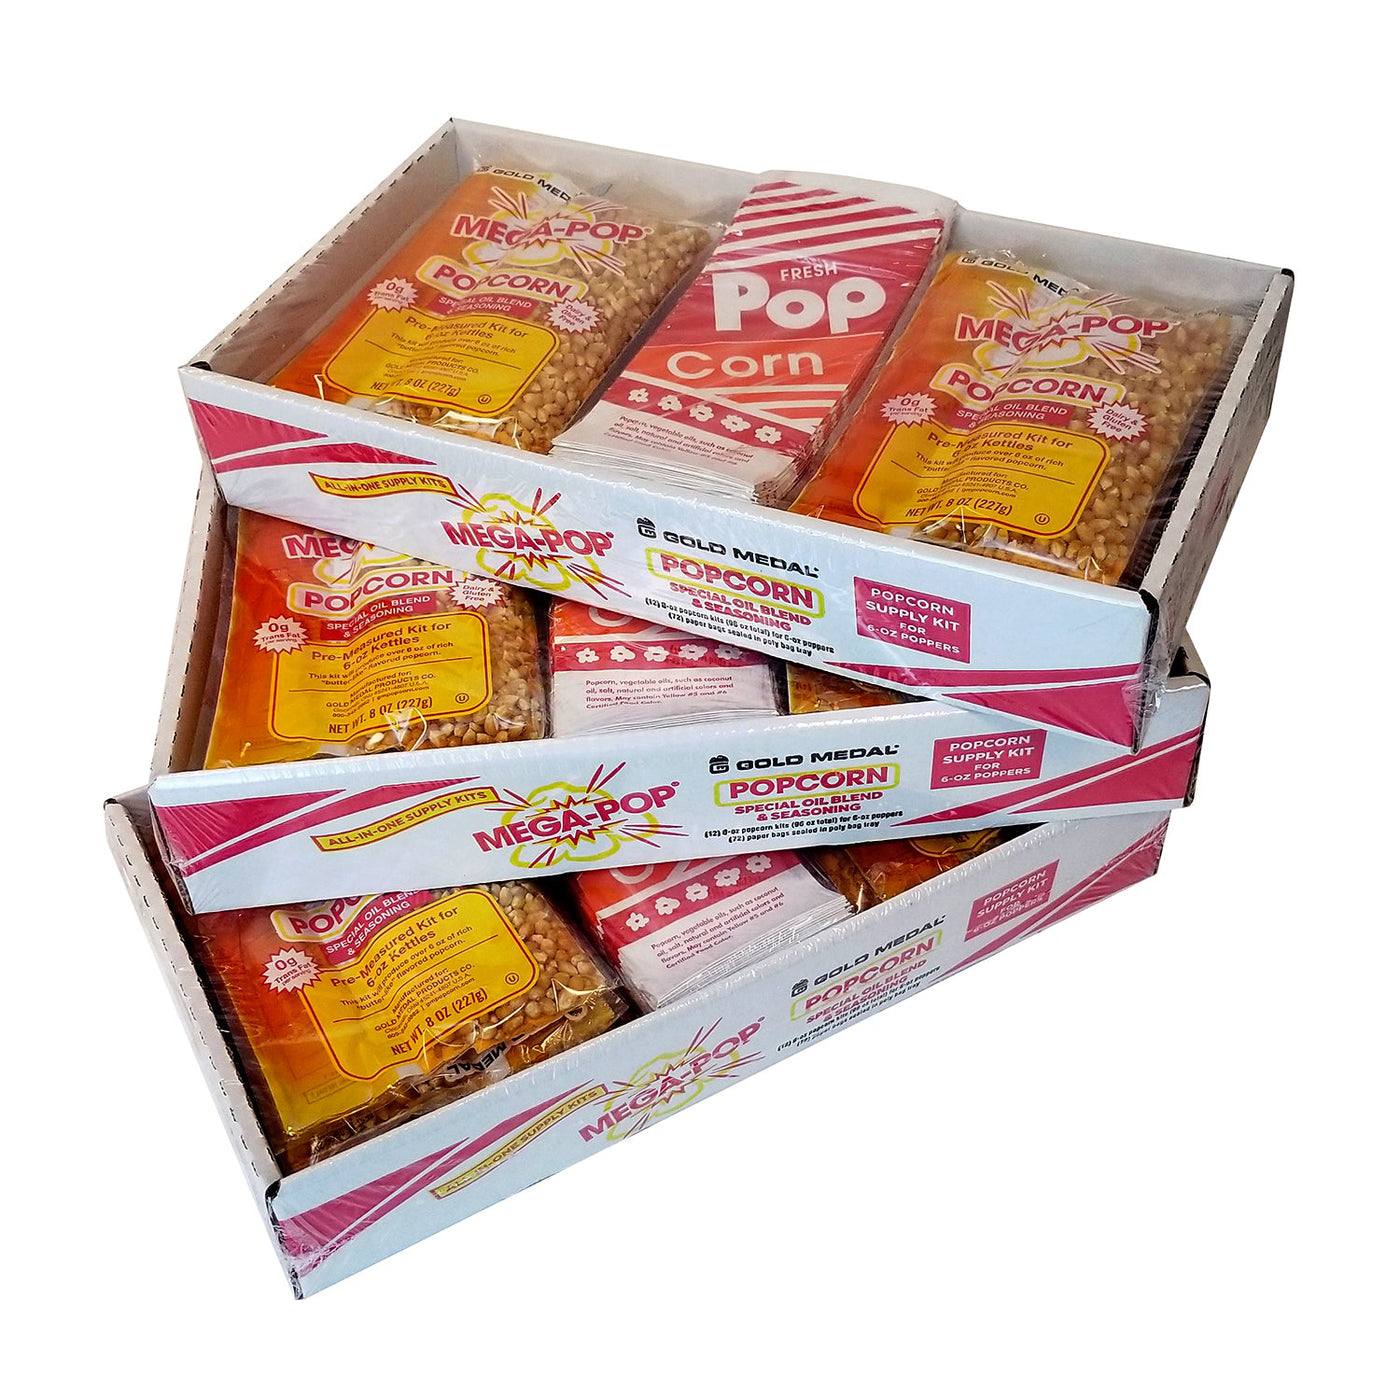 6-oz. Mega Pop® All-In-One Supply Kits